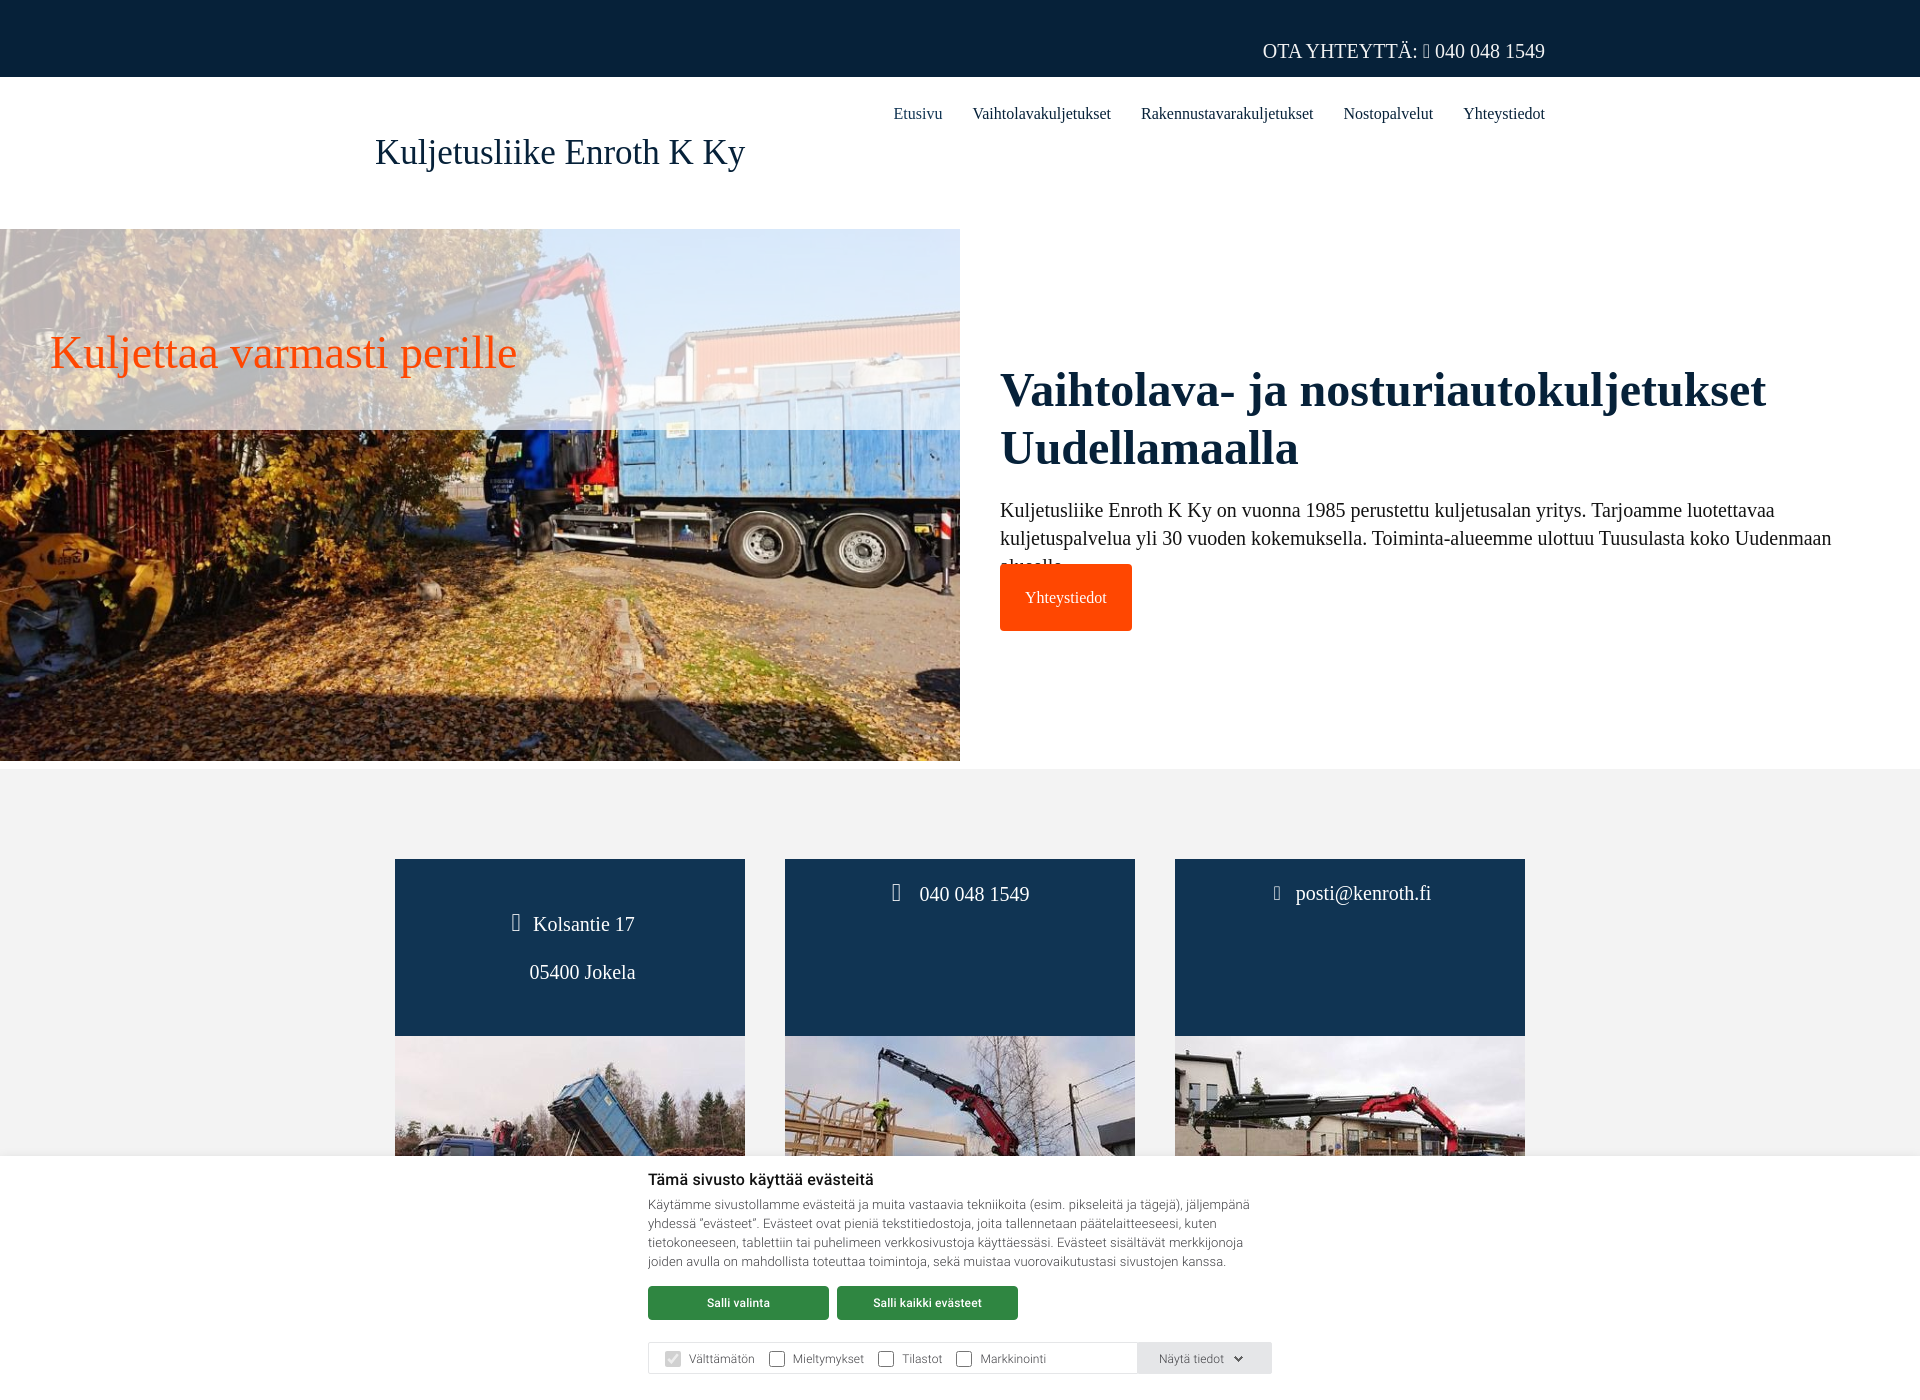 Screenshot for kuljetusliikeenroth.fi